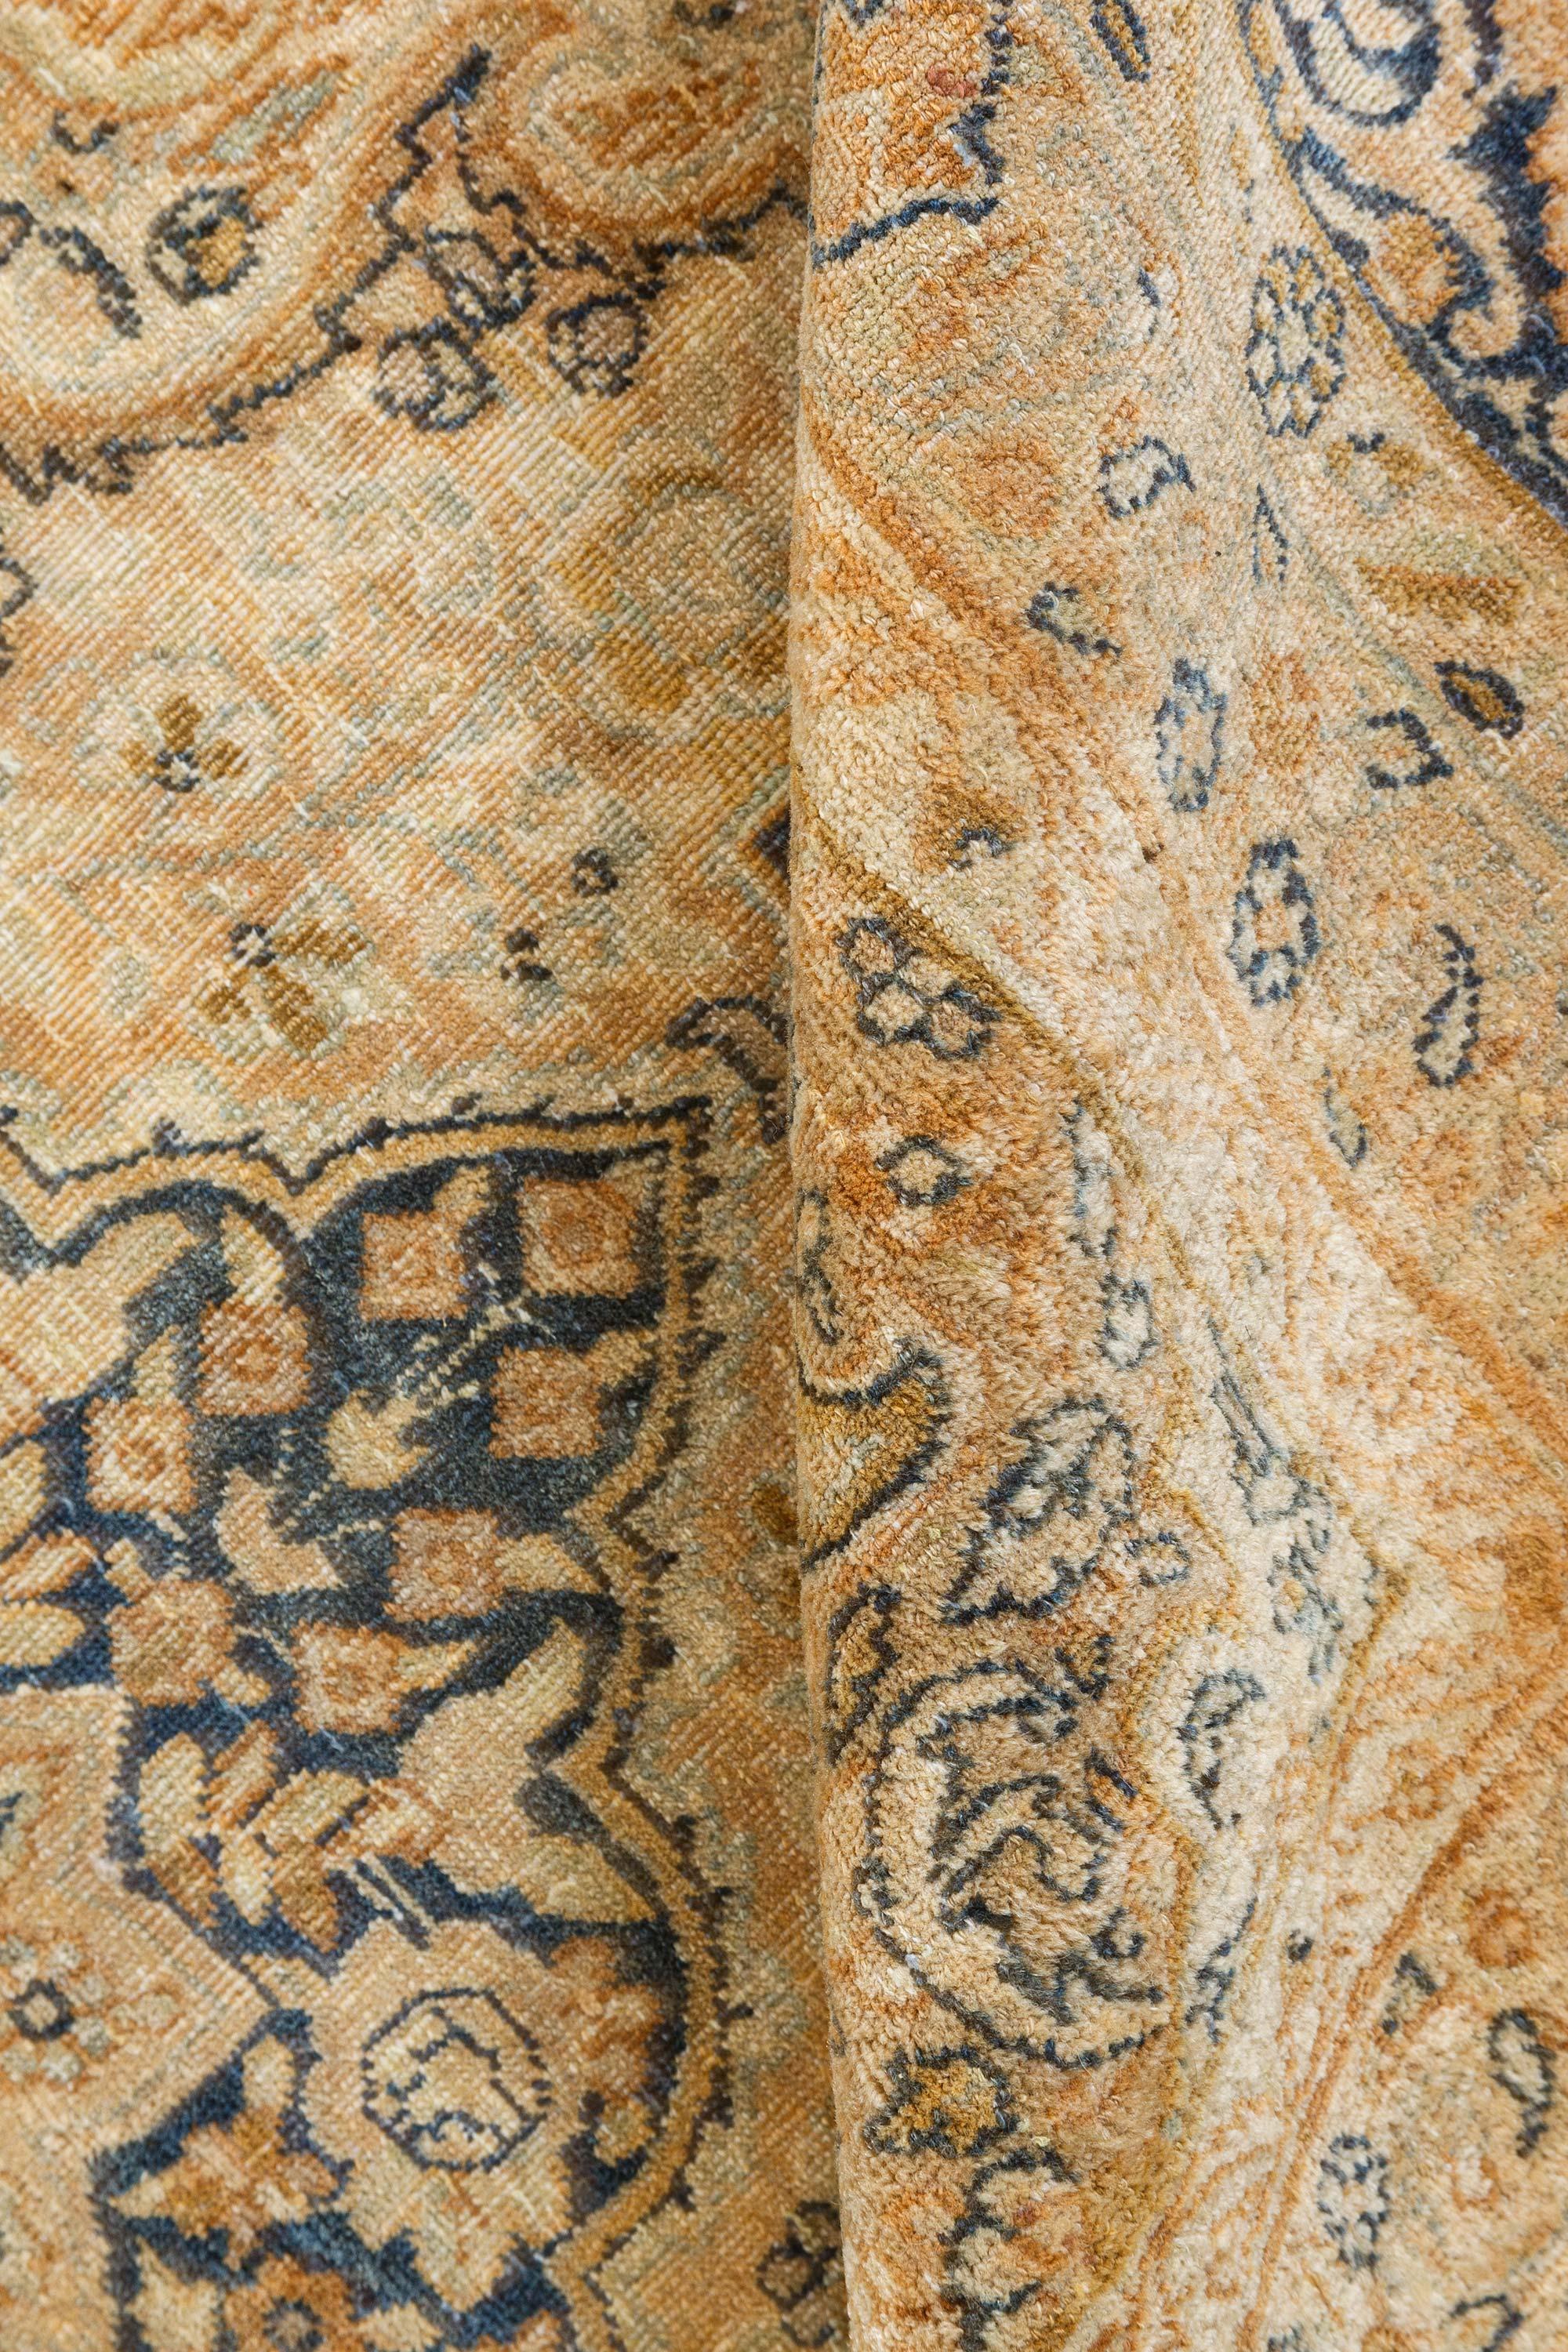 Authentic 1900s Persian Tabriz handmade wool carpet
Size: 13'8